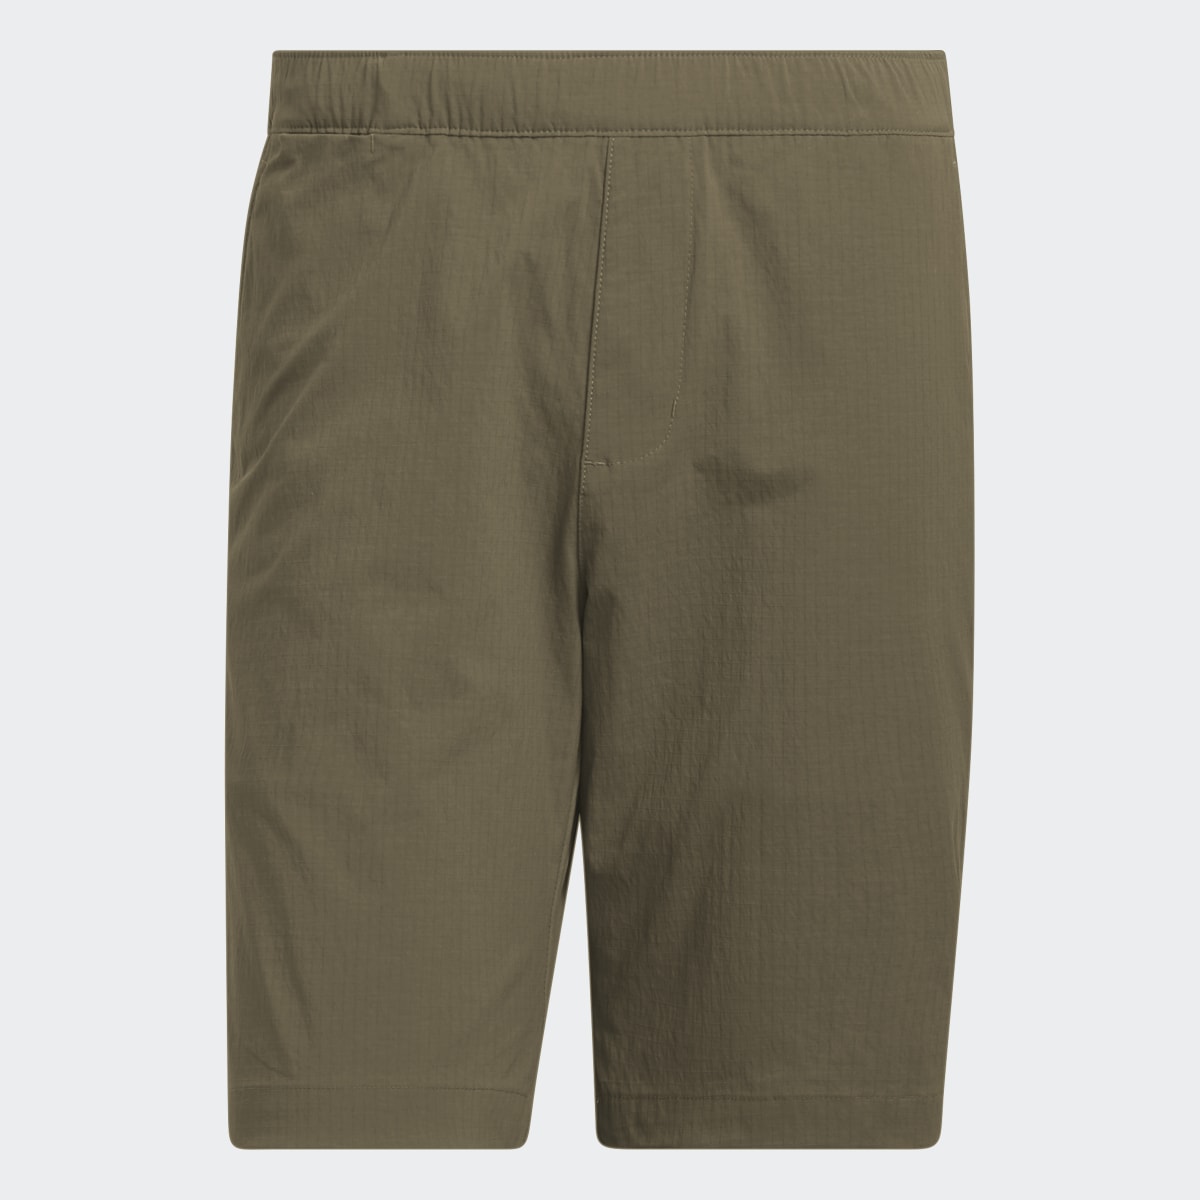 Adidas Ripstop Nine-Inch Golf Shorts. 4